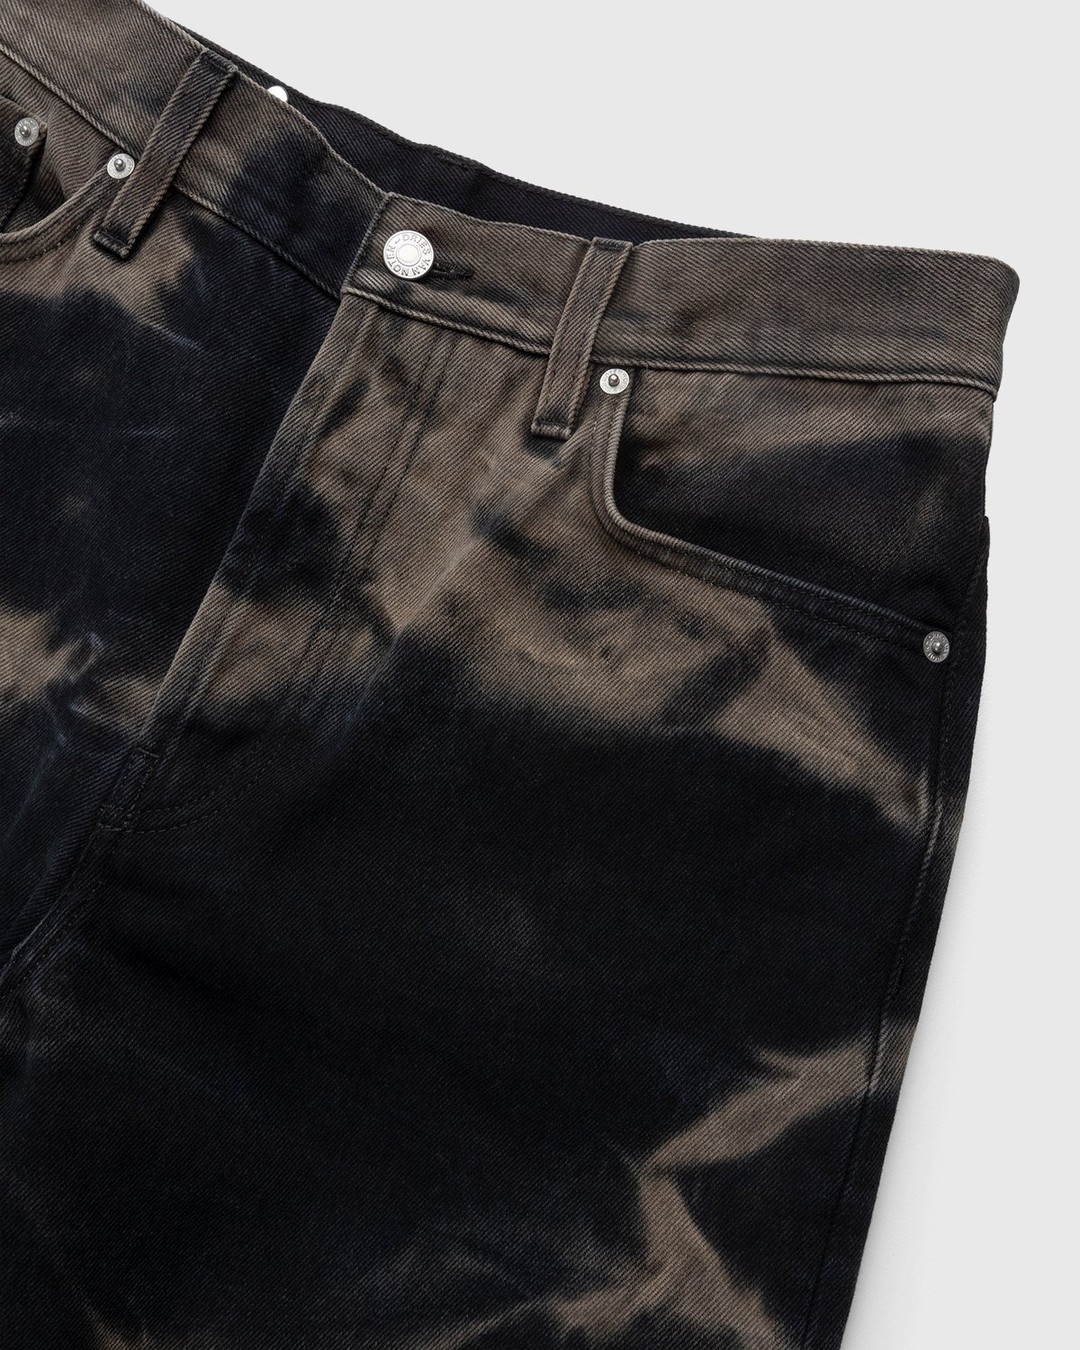 Dries van Noten – Pine Acid Wash Jeans Black - Pants - Black - Image 5